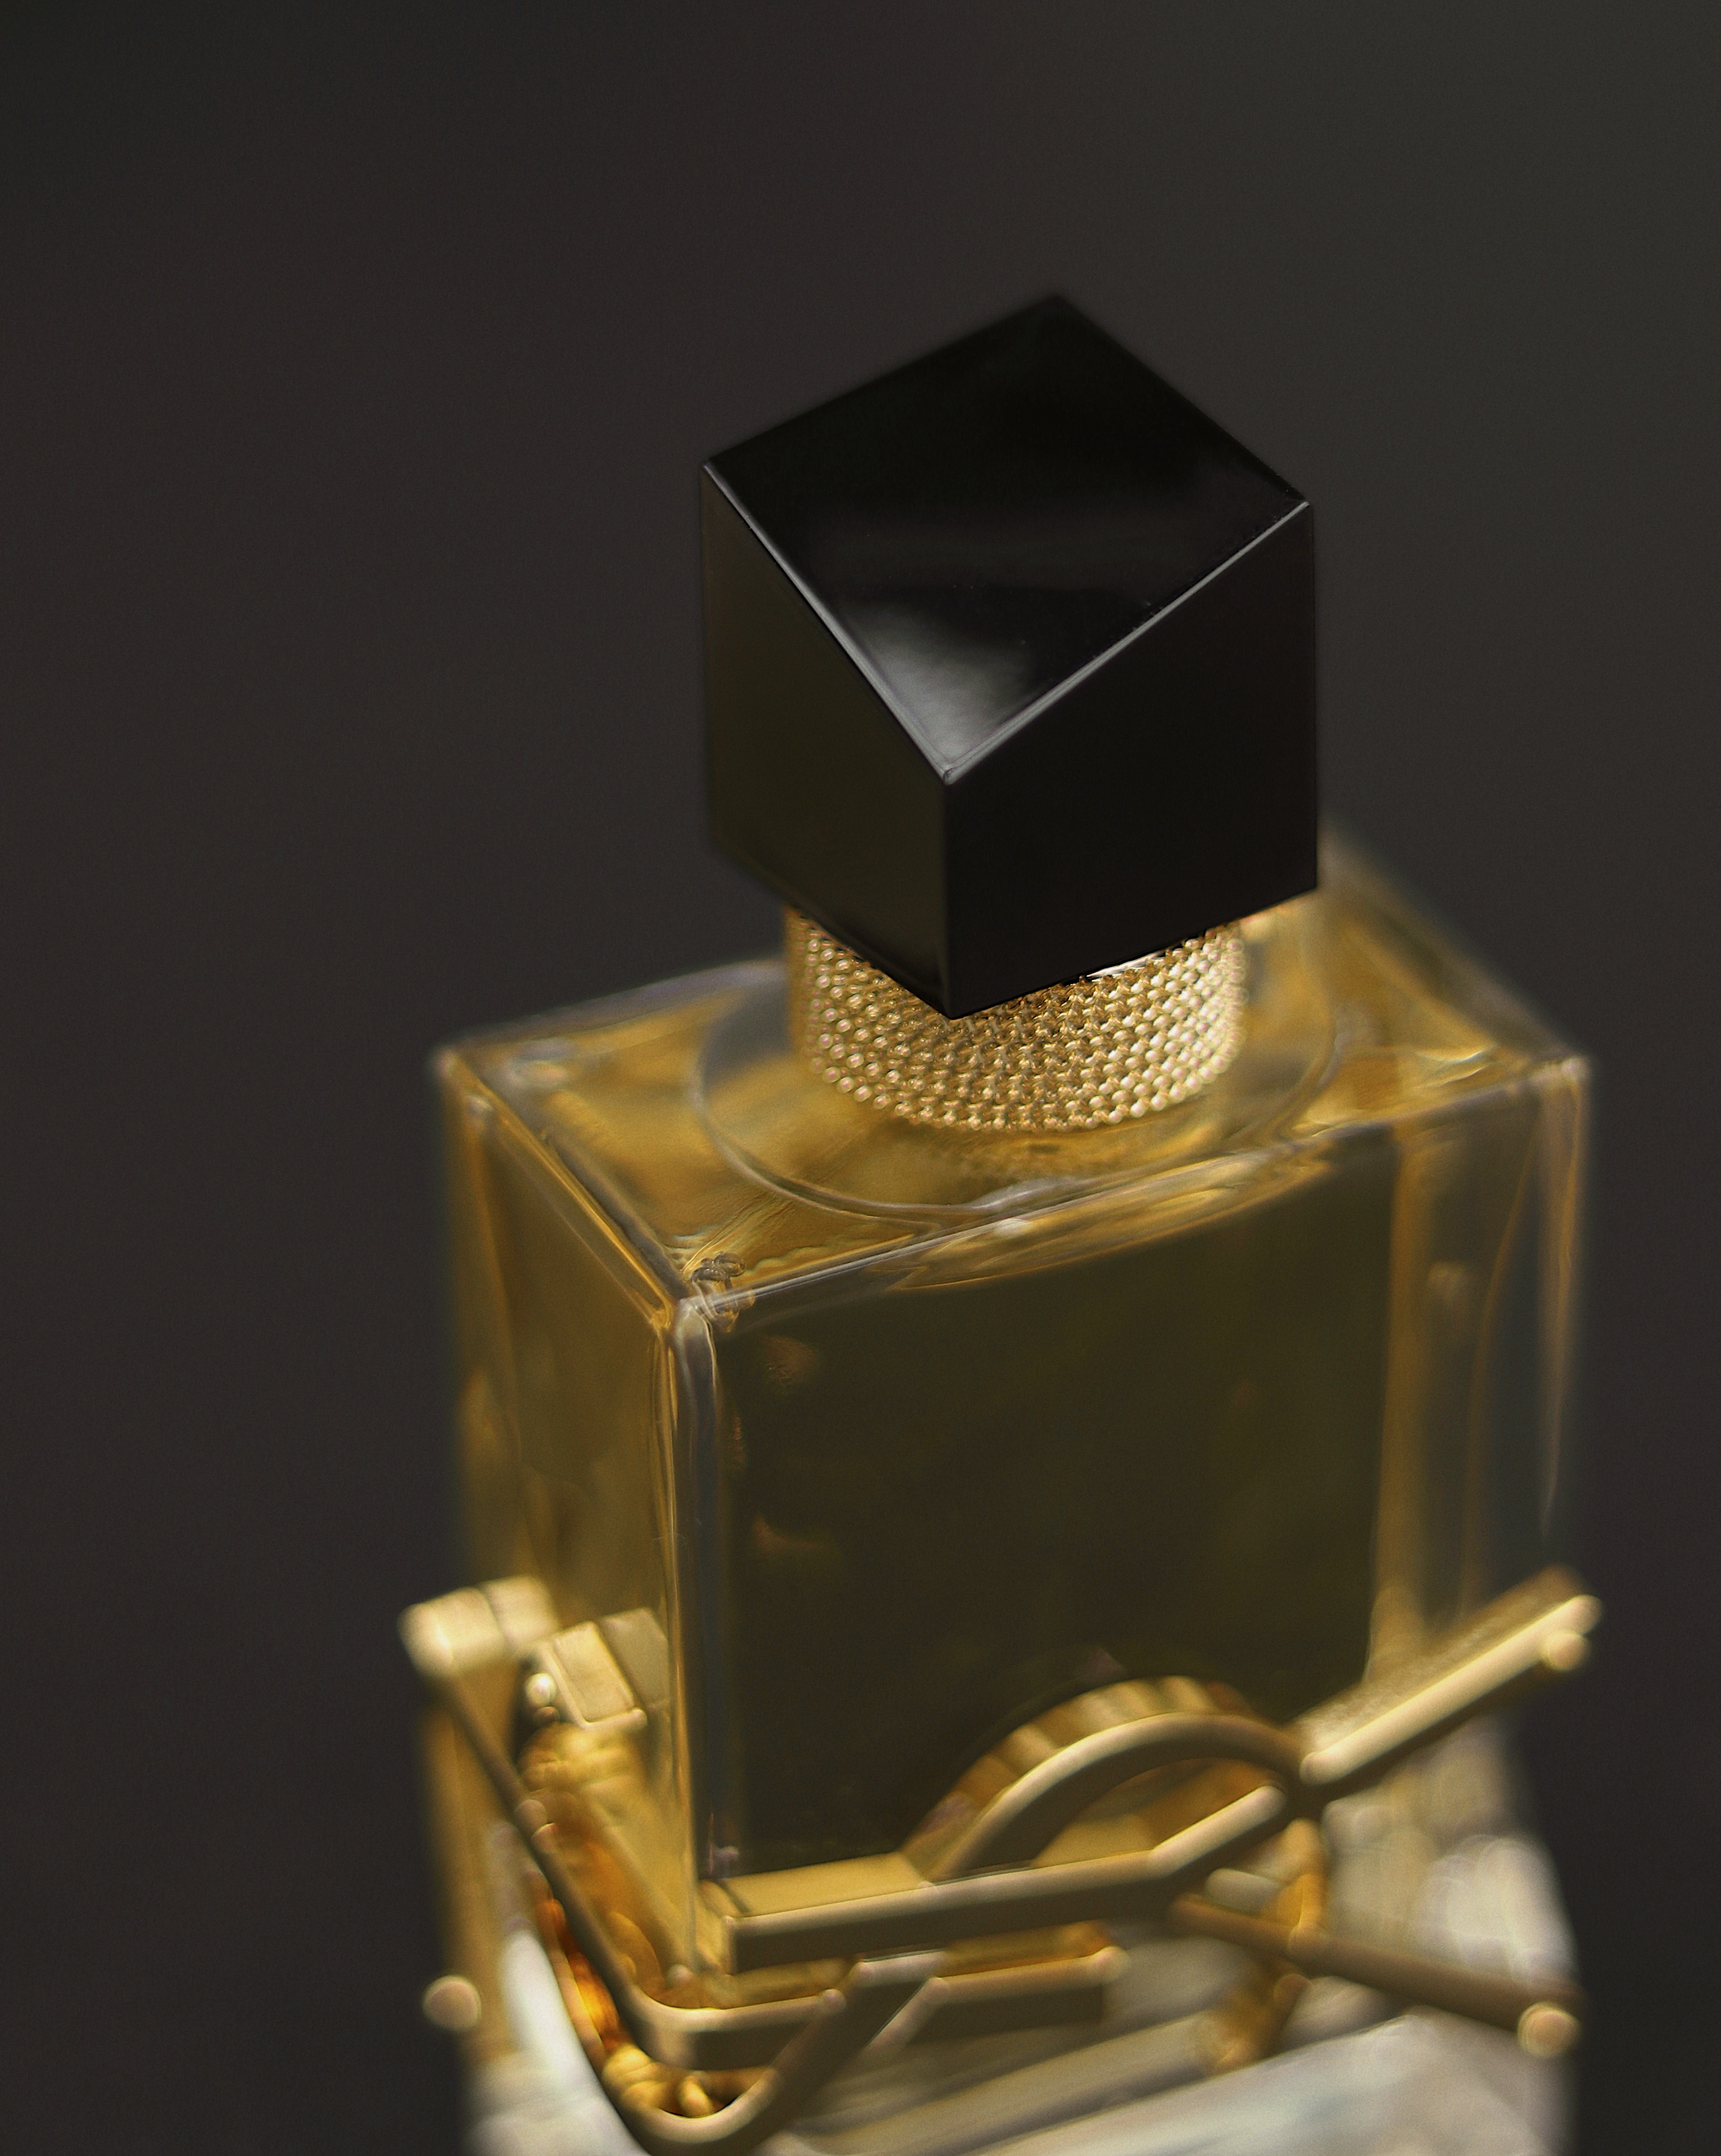 YSL Libre Perfume: The Review - Escentual's Blog